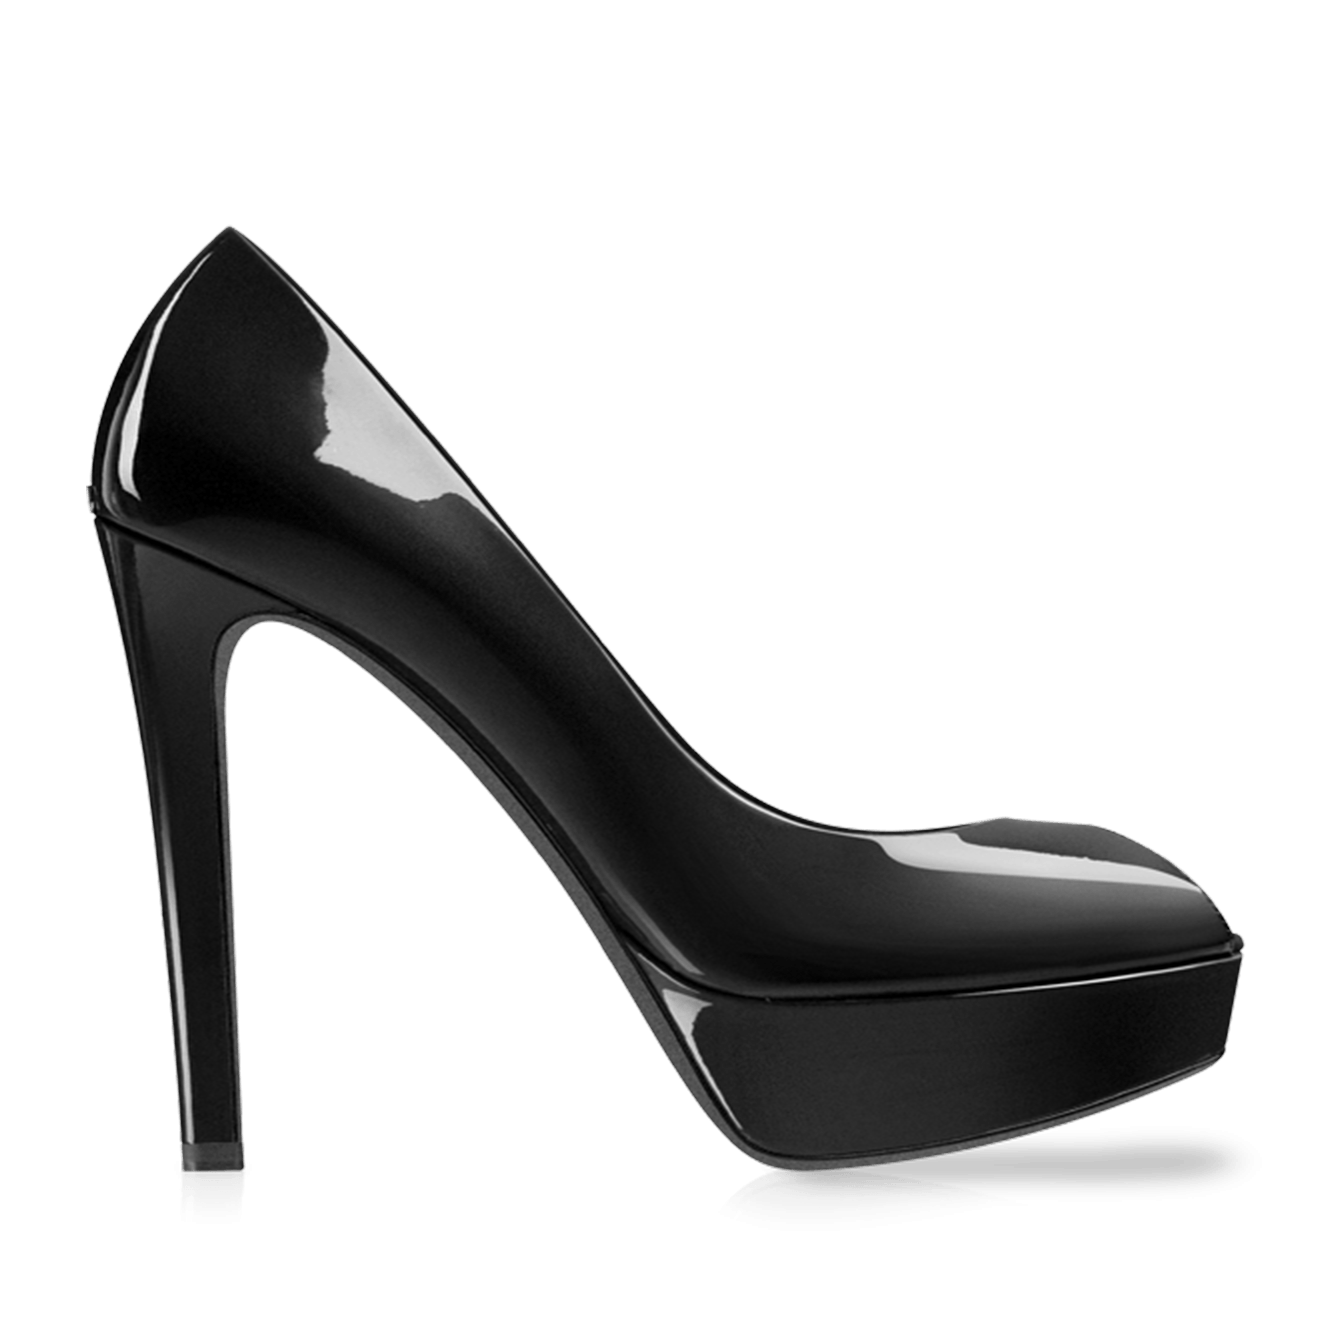 Black Heel Women Shoes PNG HD pngteam.com